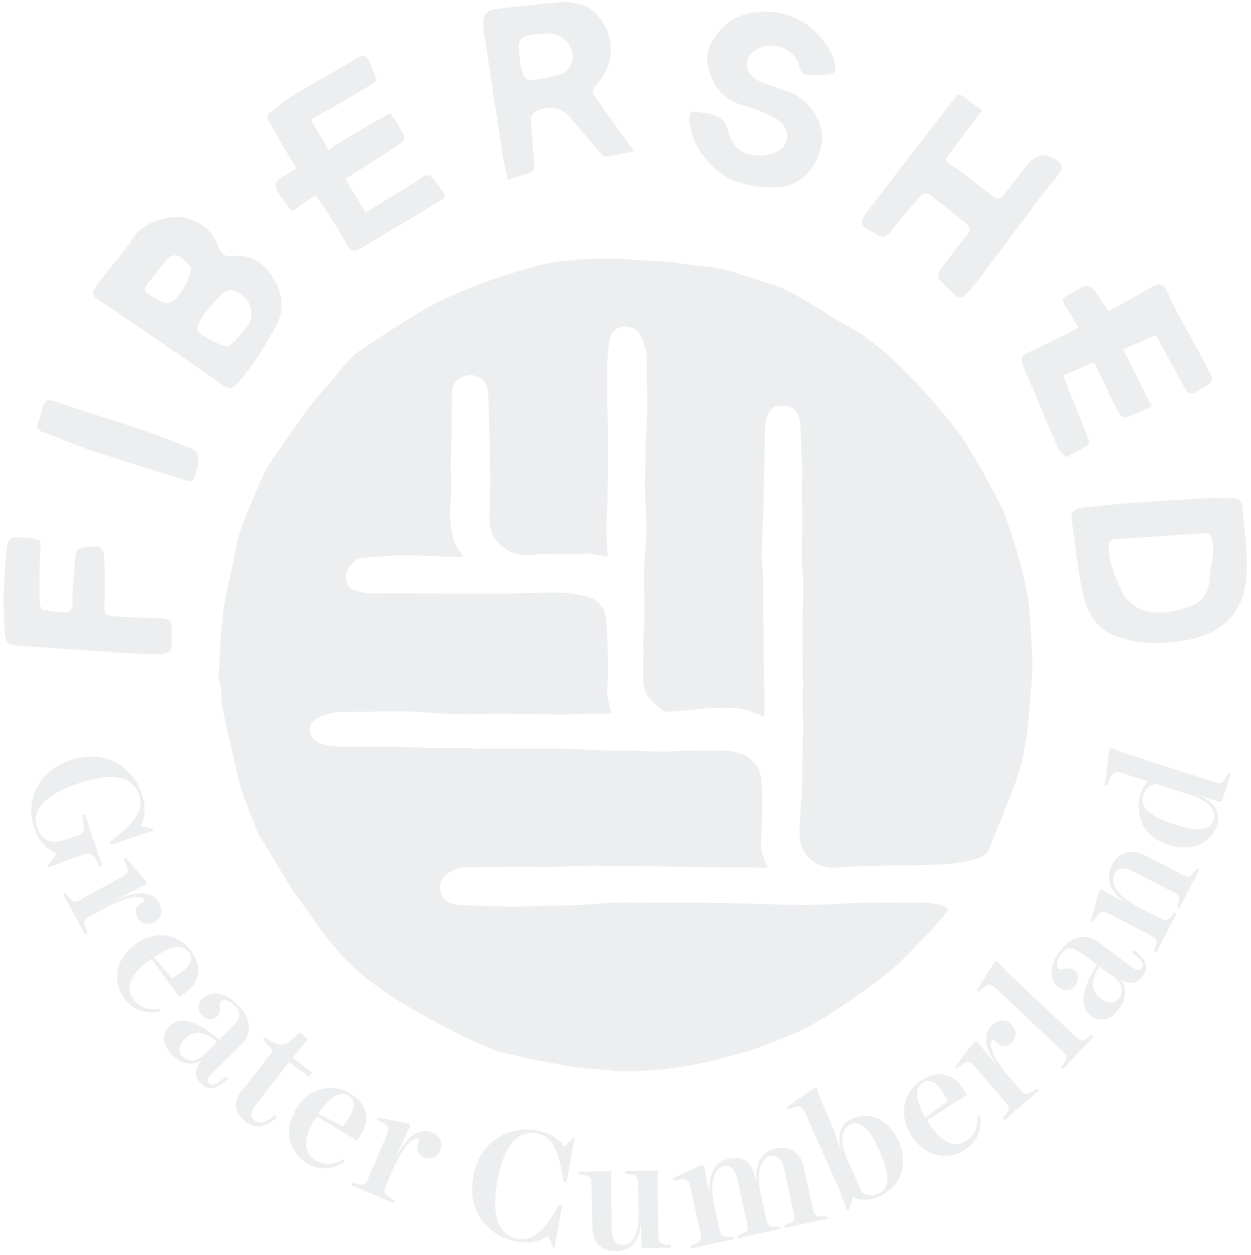 Greater Cumberland Fibershed